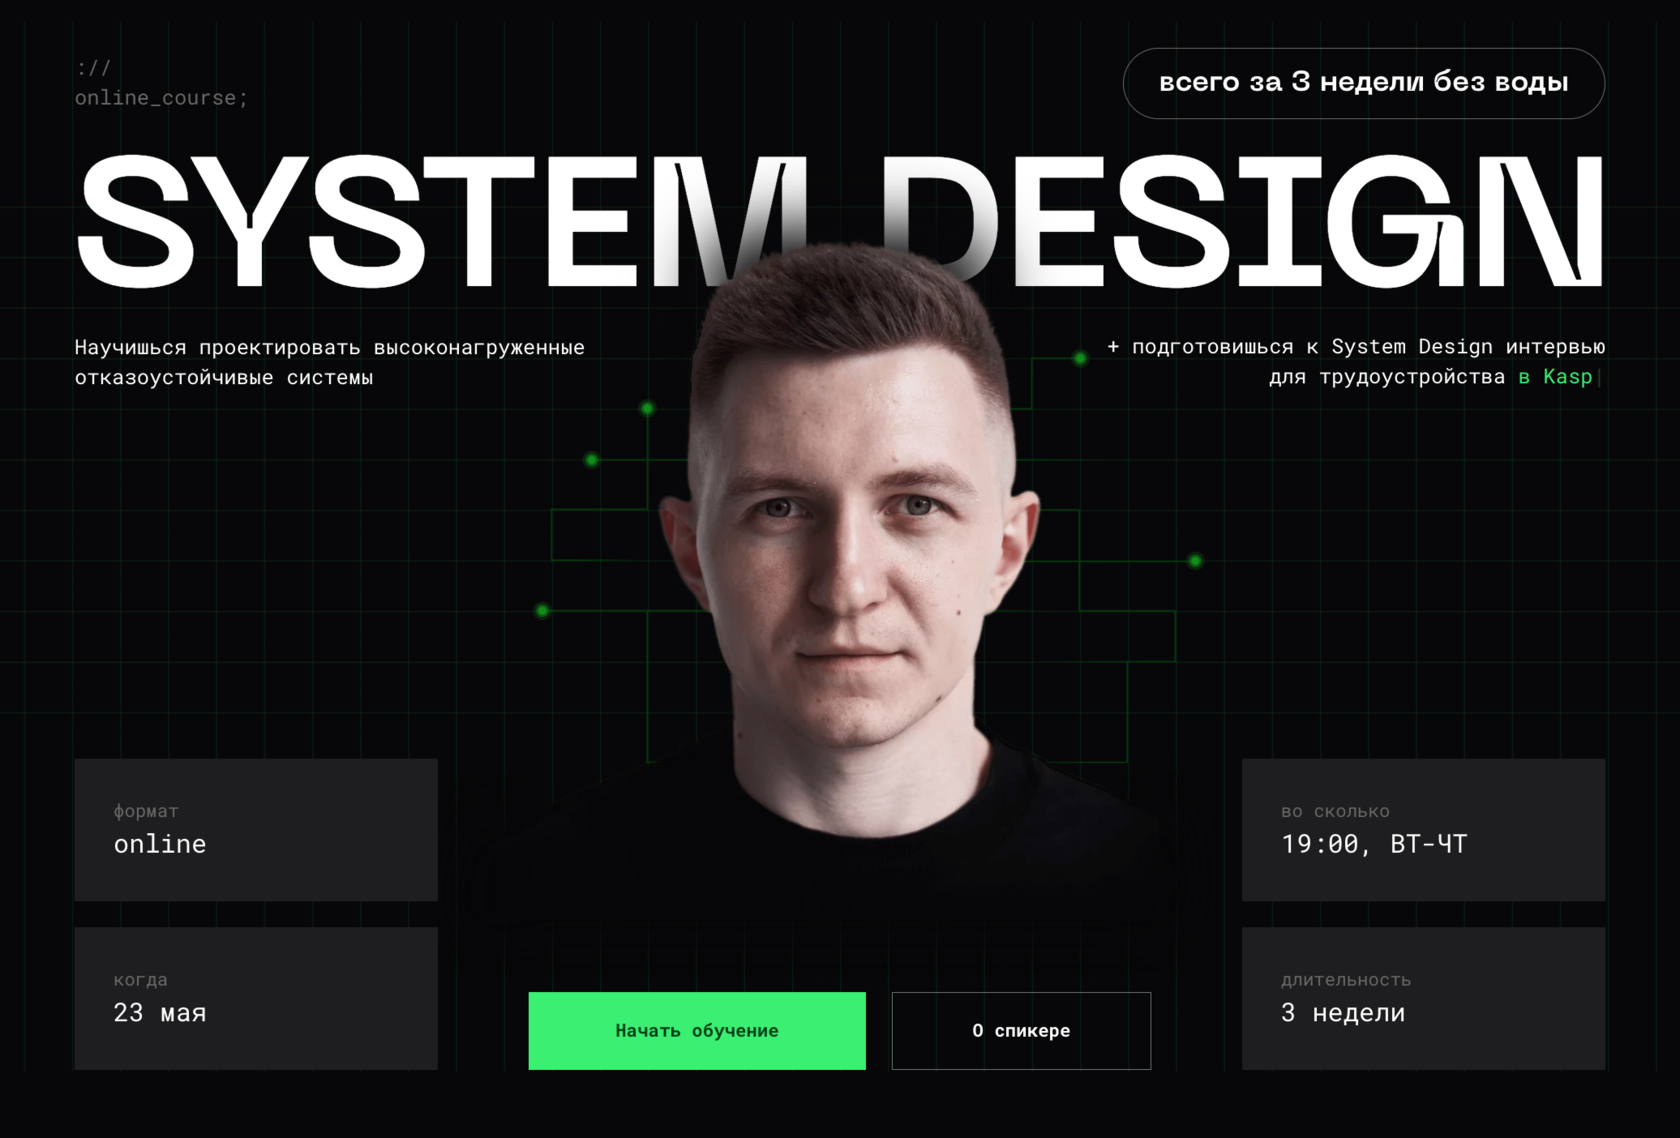 System Design Interview. K-Systems. Alex xu System Design Interview. Steam systems